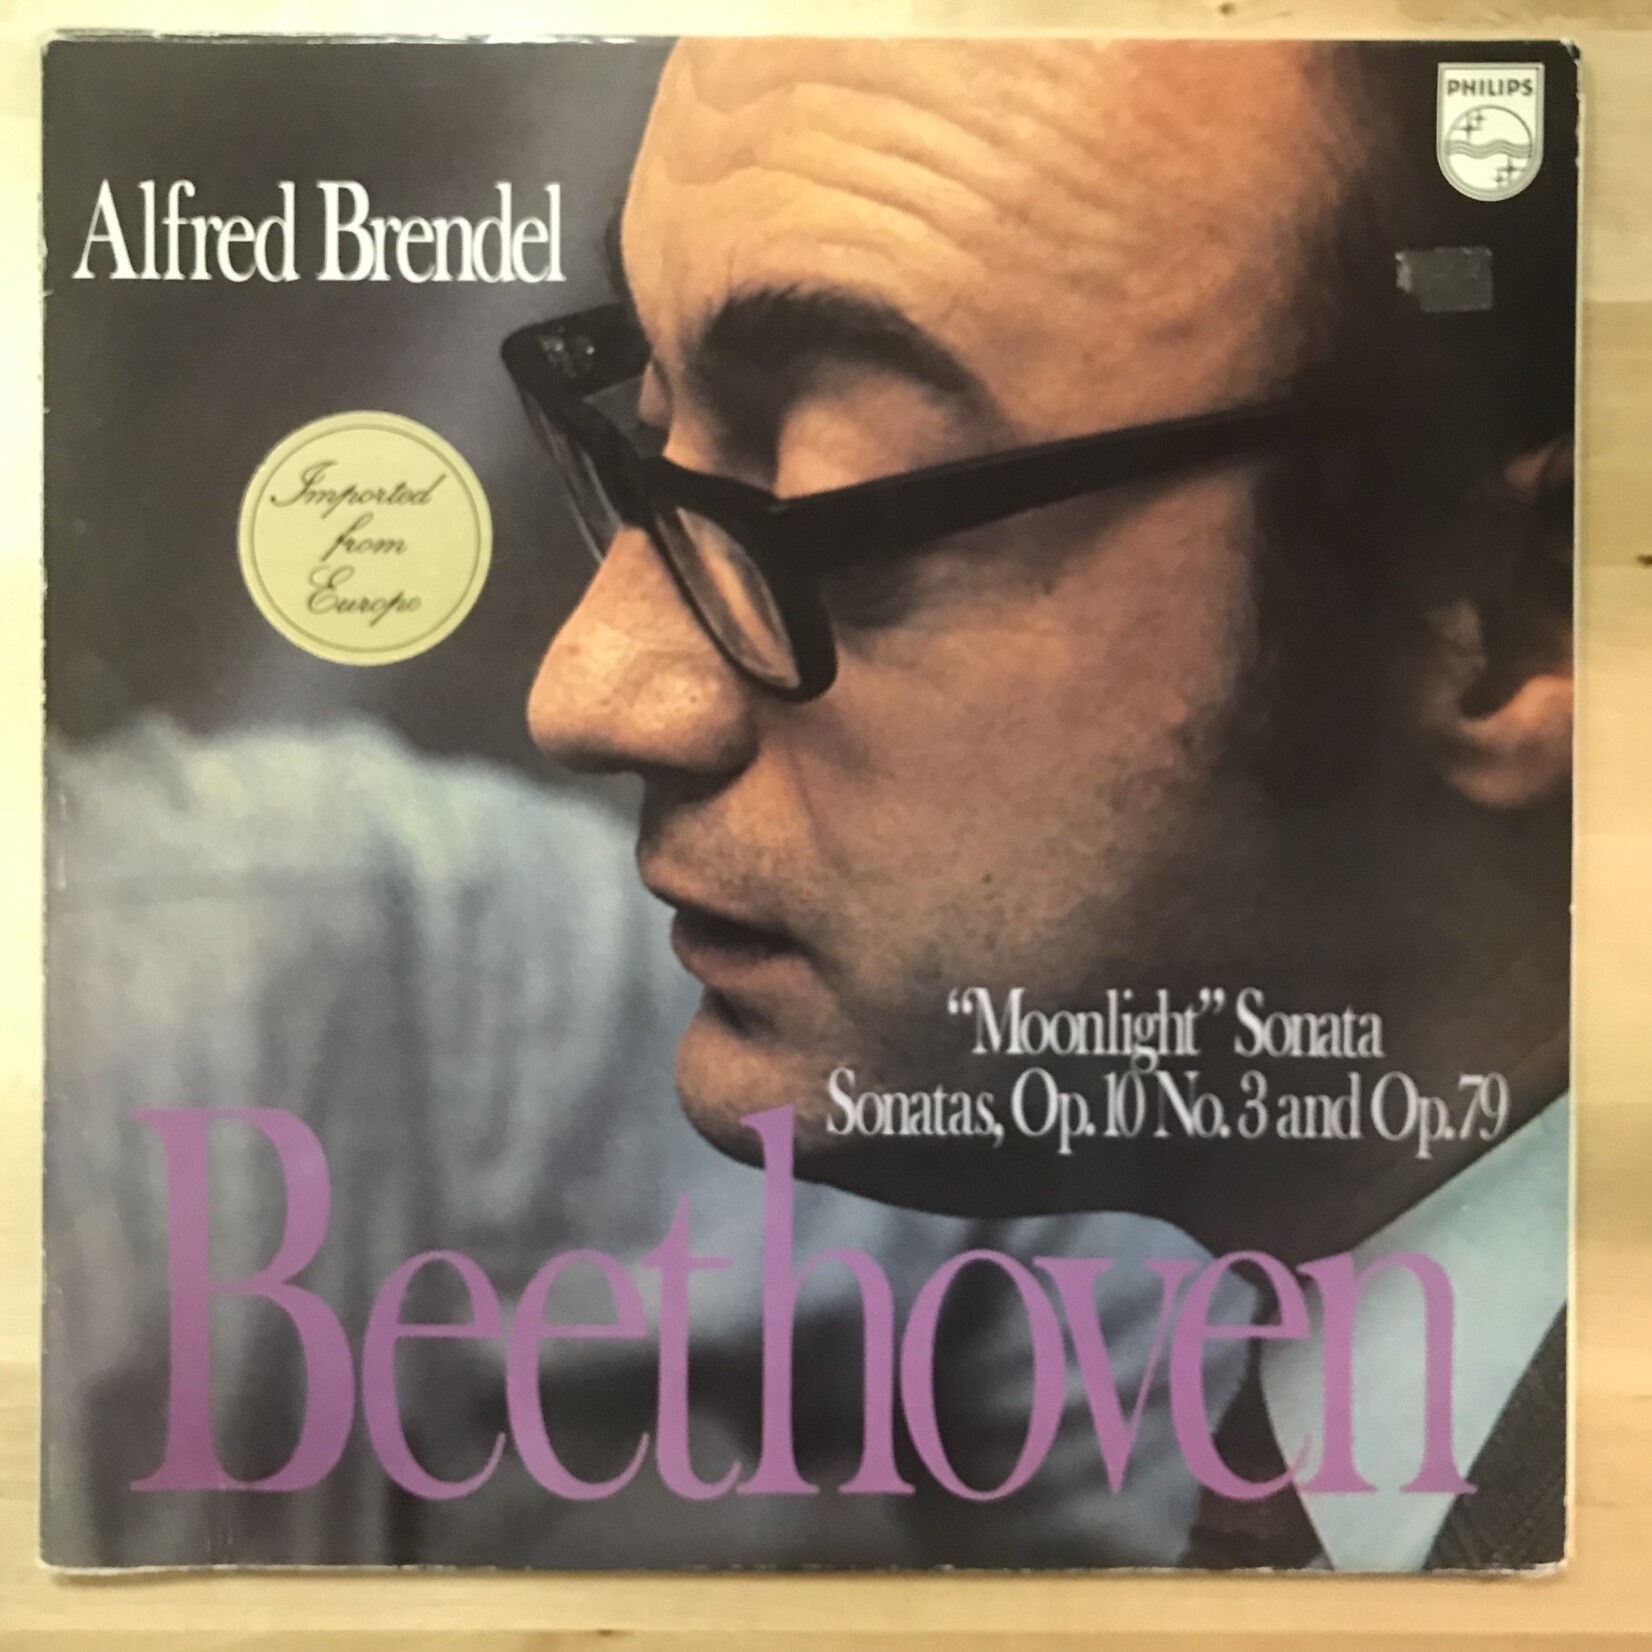 Alfred Brendel - Beethoven: “Moonlight” Sonata - 6500 417 - Vinyl LP (USED - NETHERLANDS)